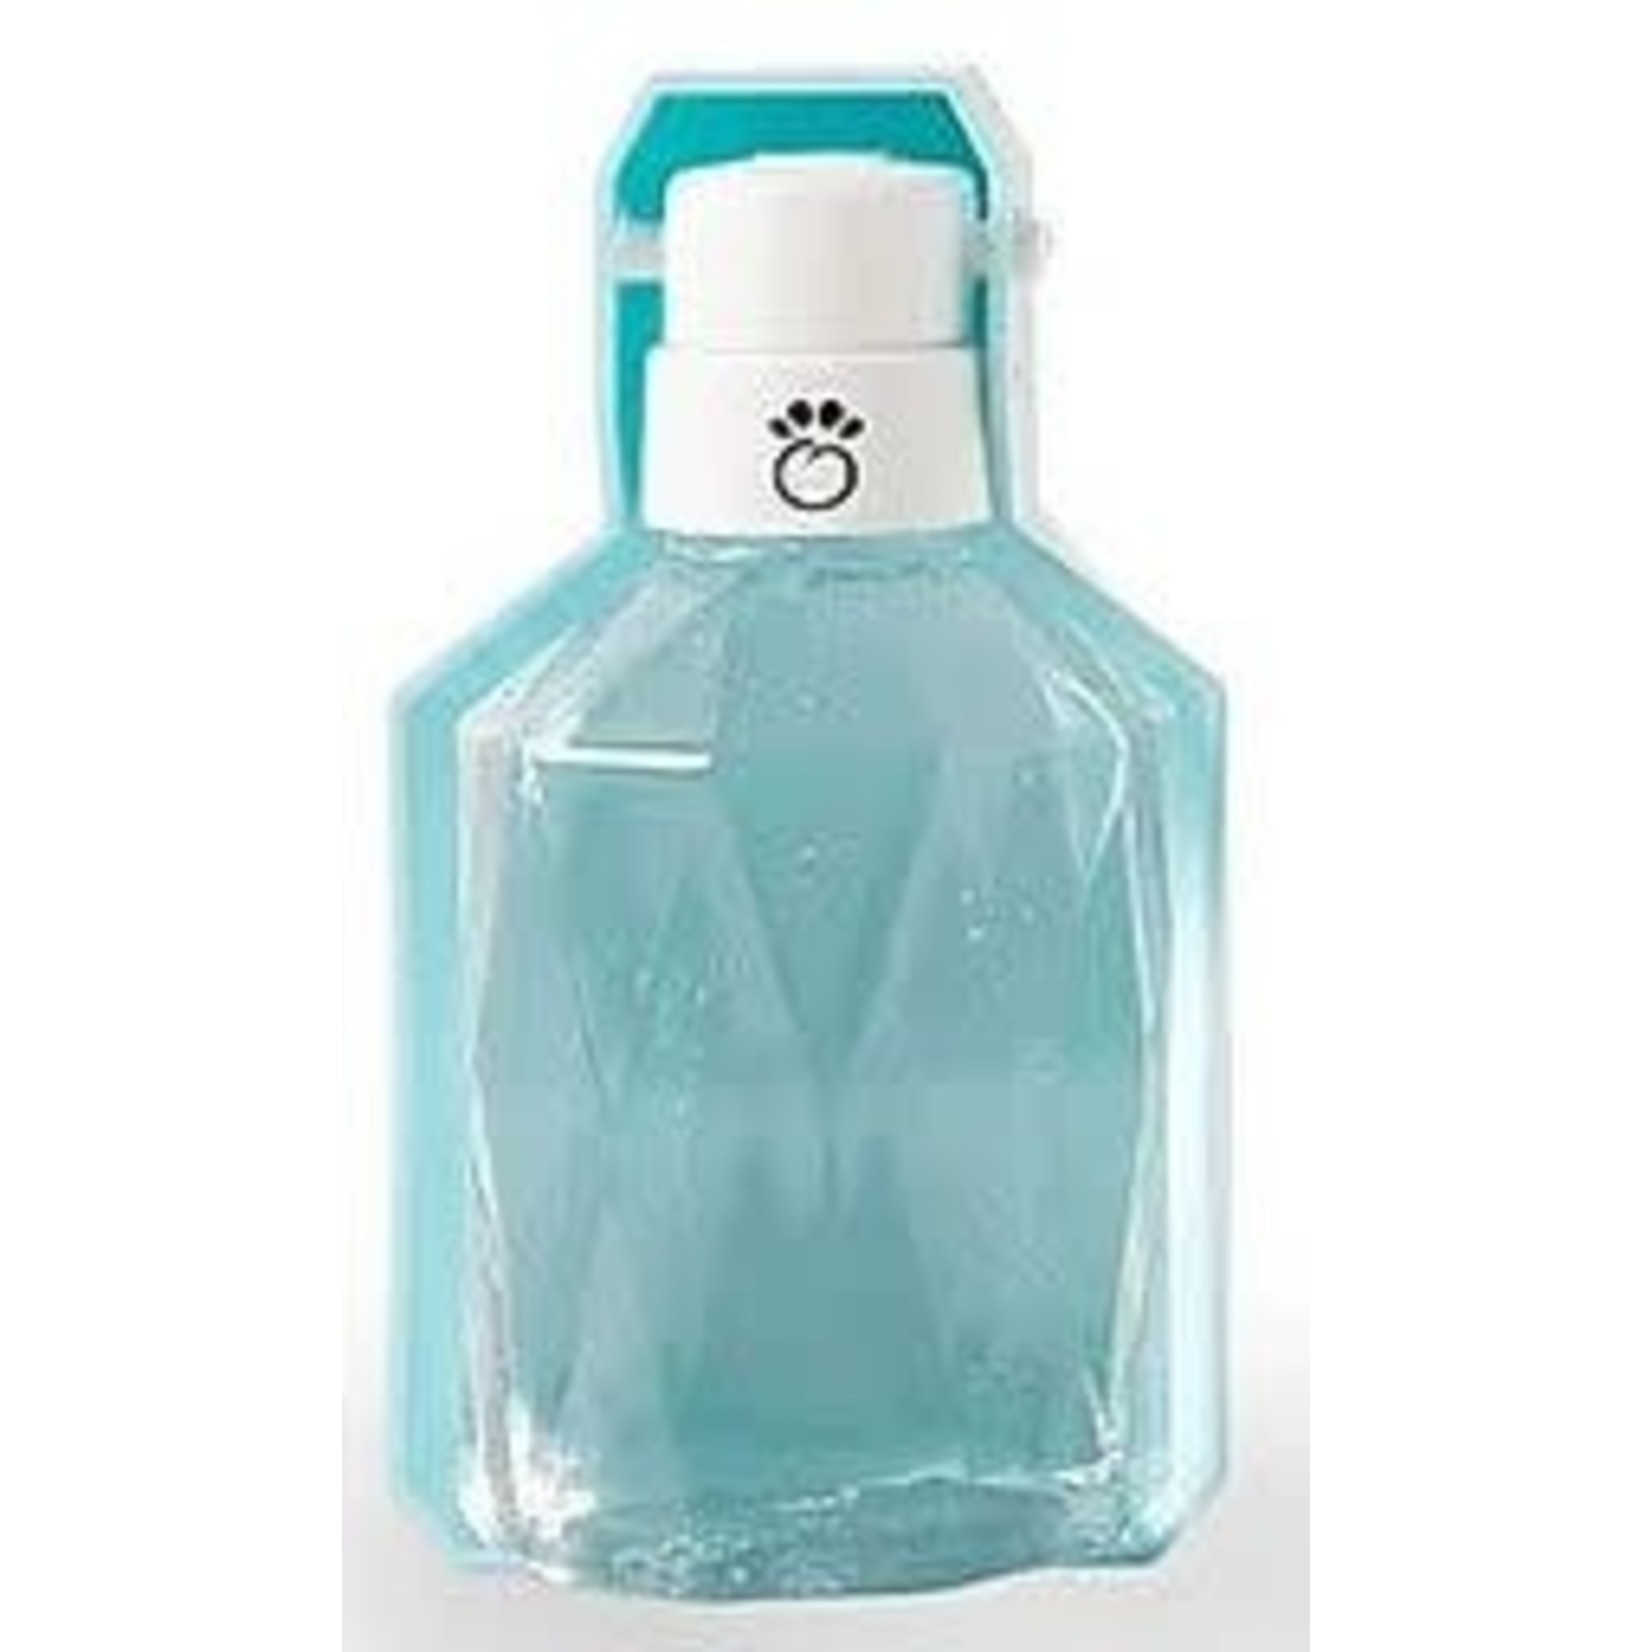 GFPet Travel Pet Water Bottles